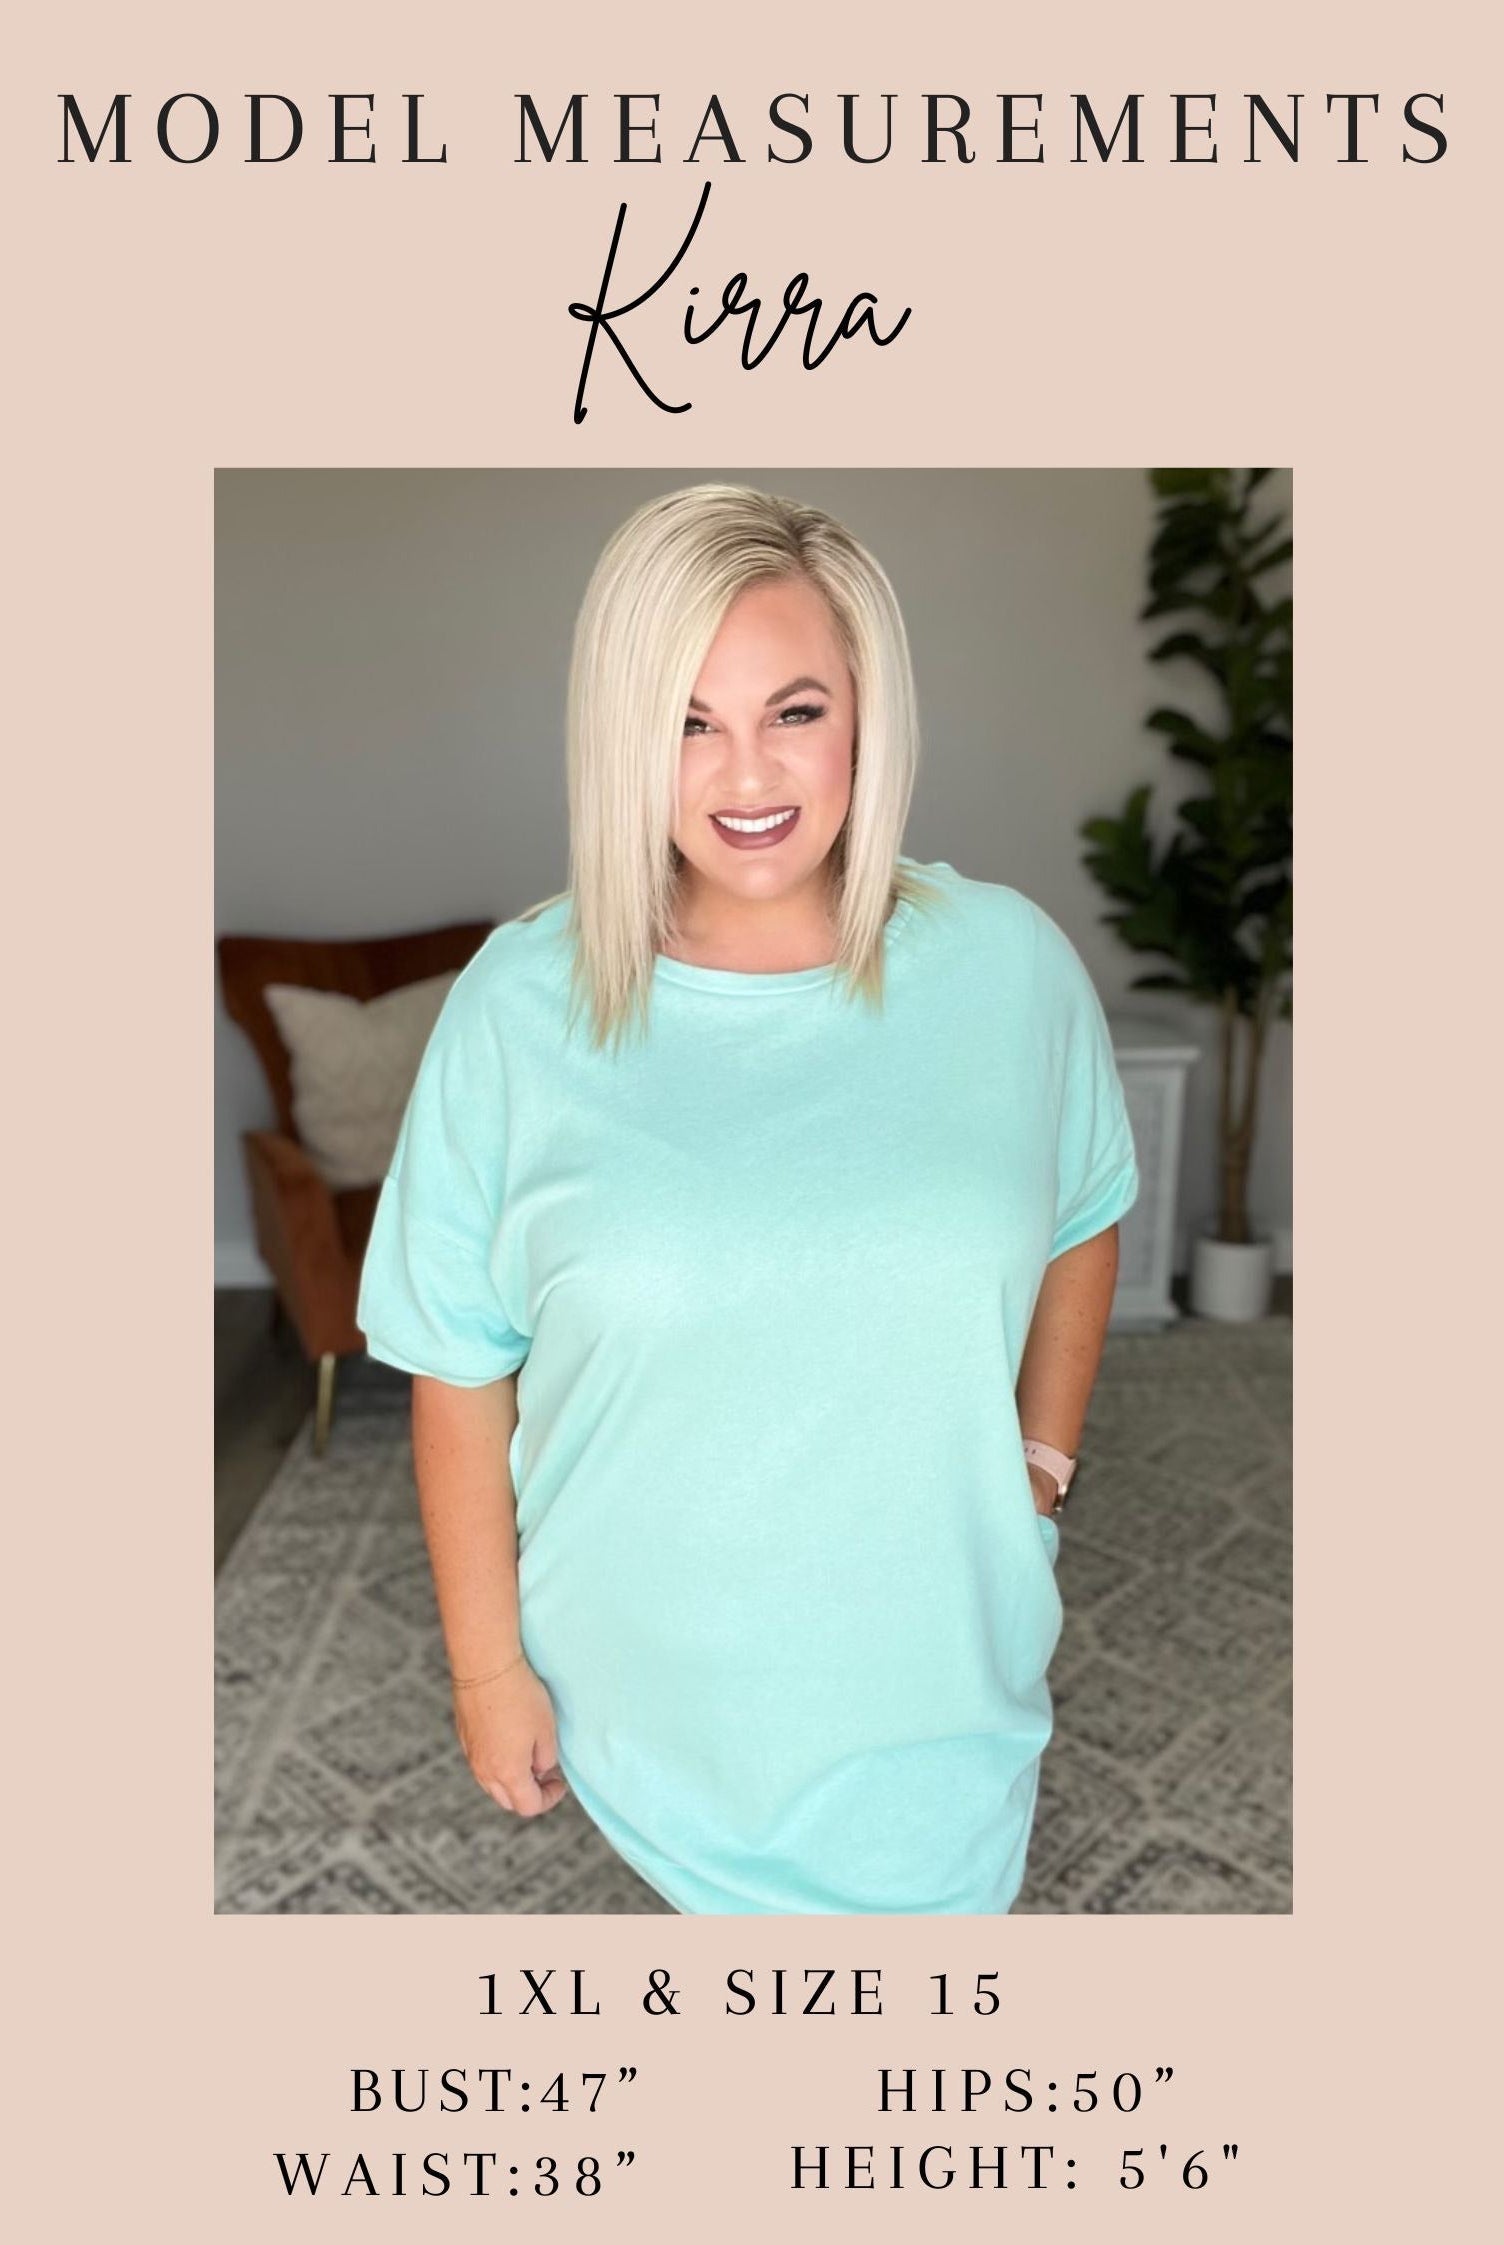 Judy Blue Imogene Control Top Retro Flare Overalls in Black-Overalls-Krush Kandy, Women's Online Fashion Boutique Located in Phoenix, Arizona (Scottsdale Area)